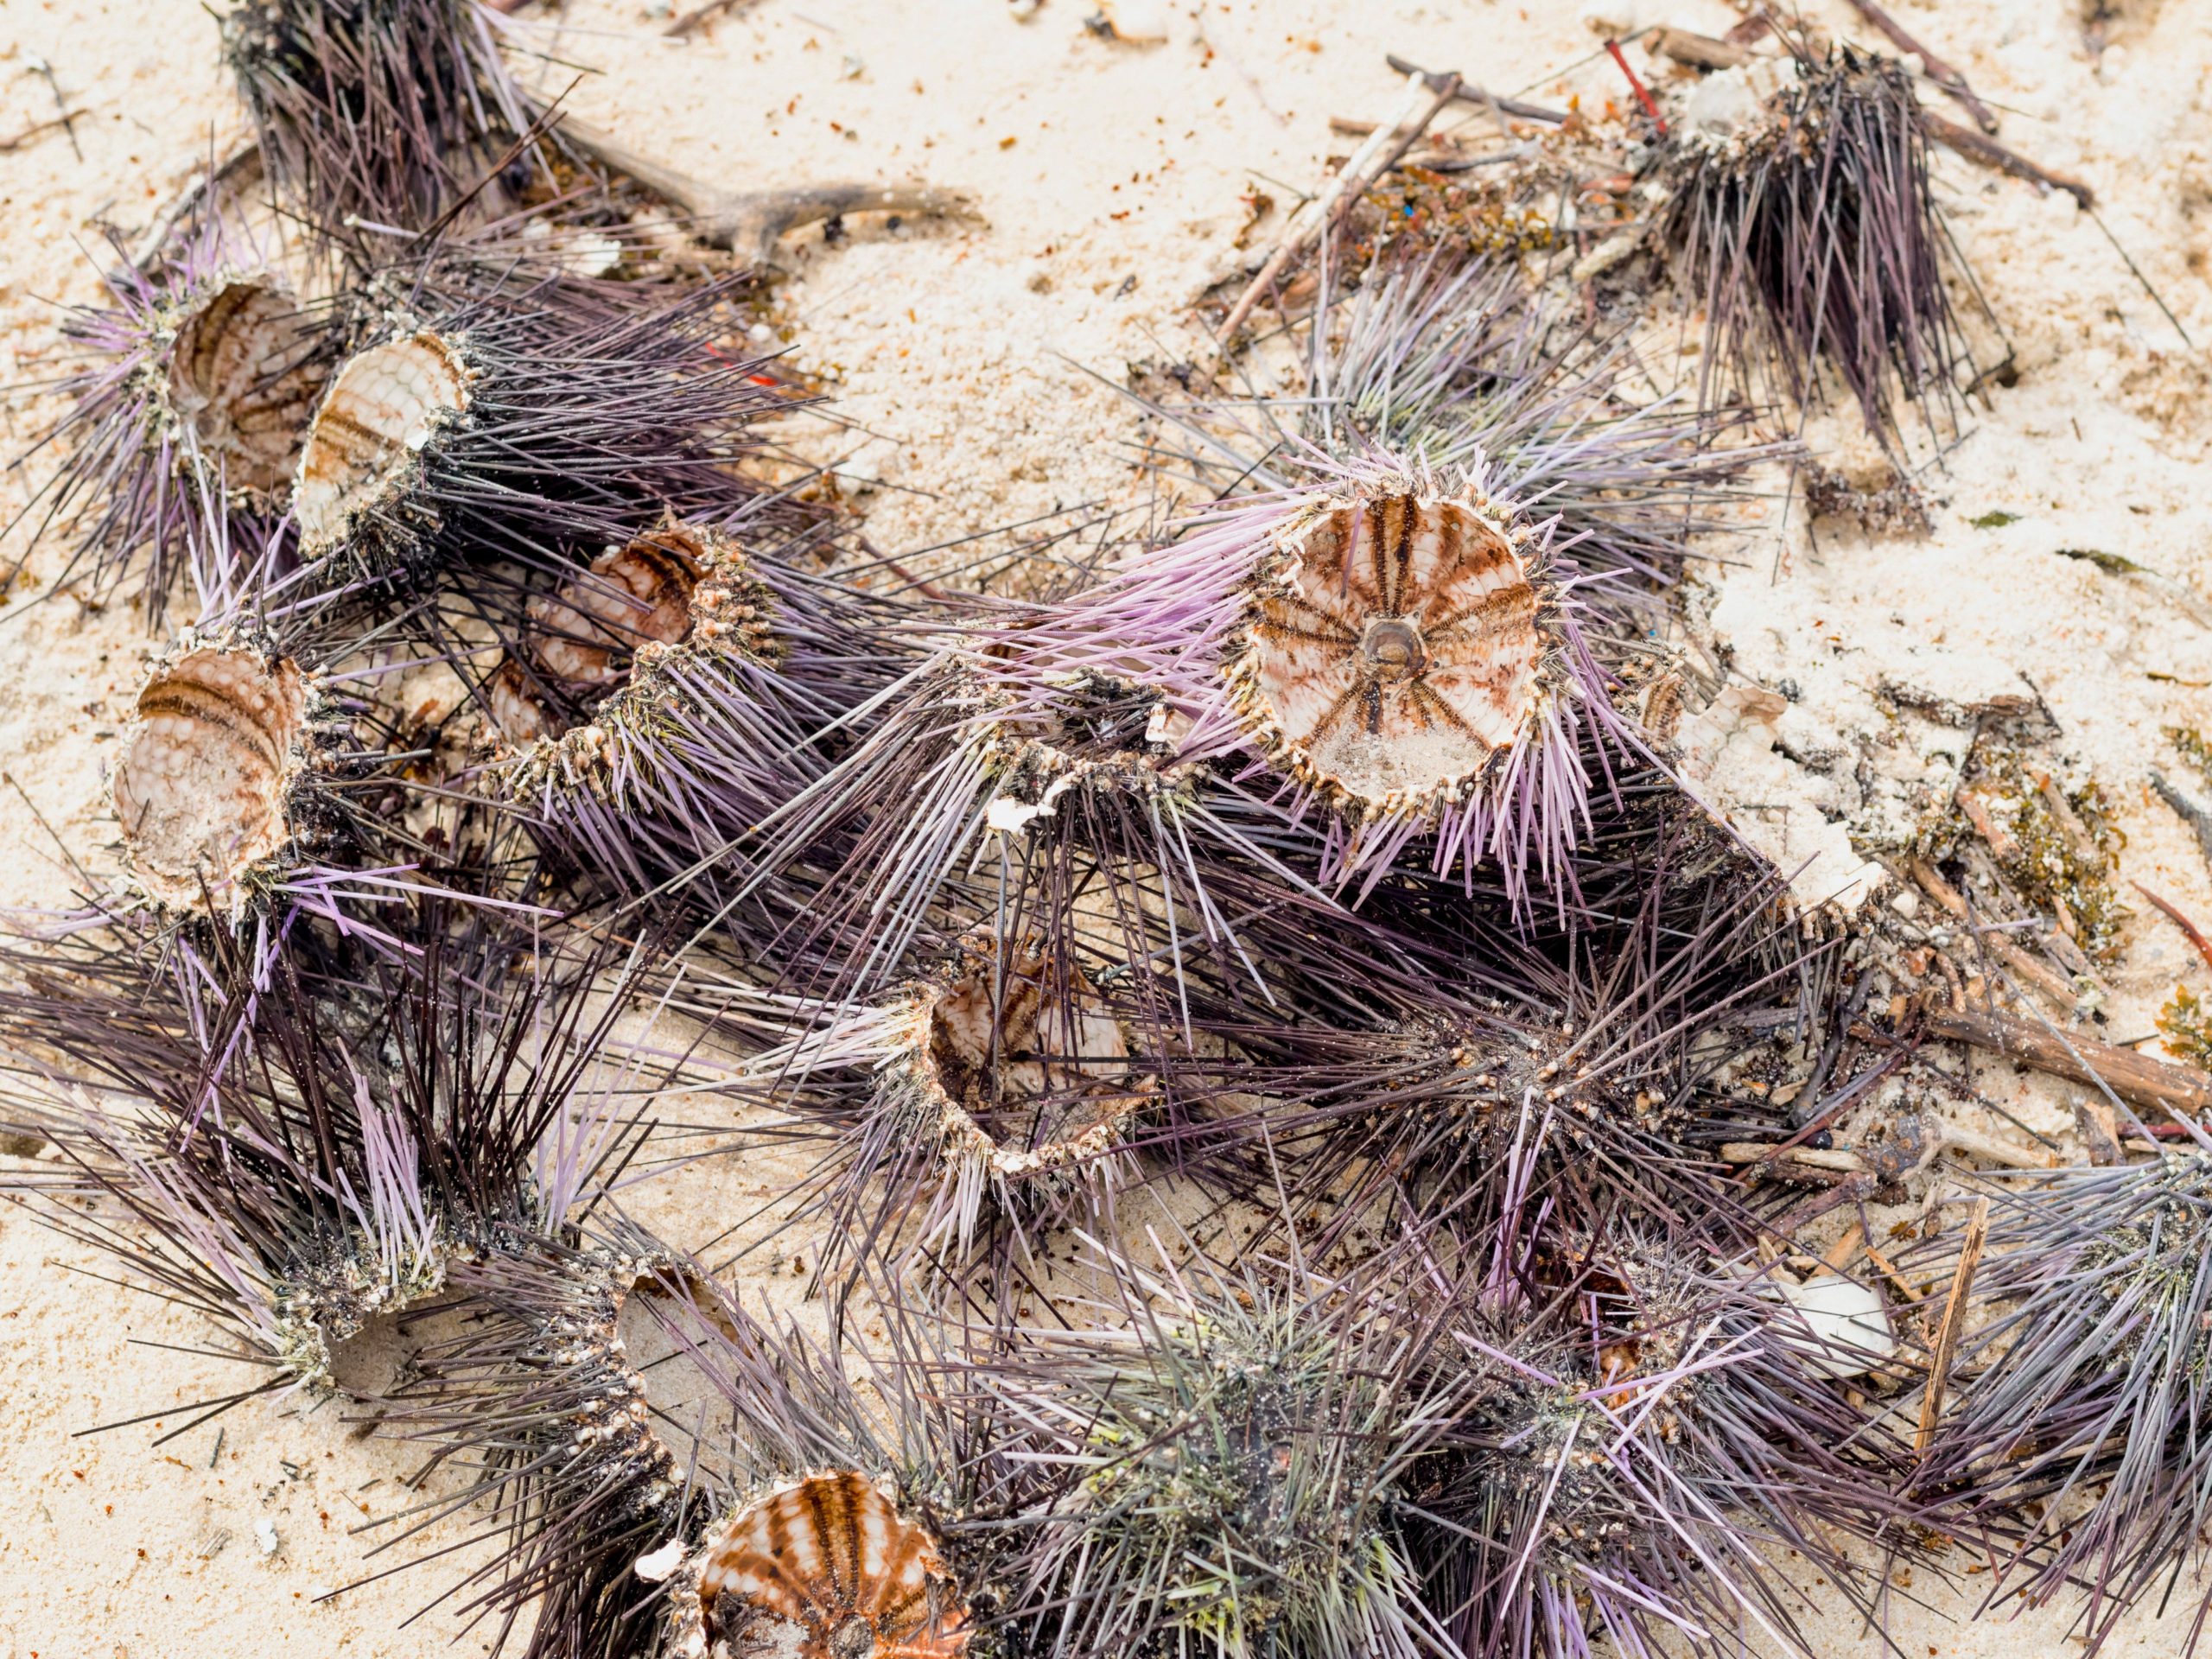 Dried up long-spined sea urchins. PC: Sergei Pivovarov